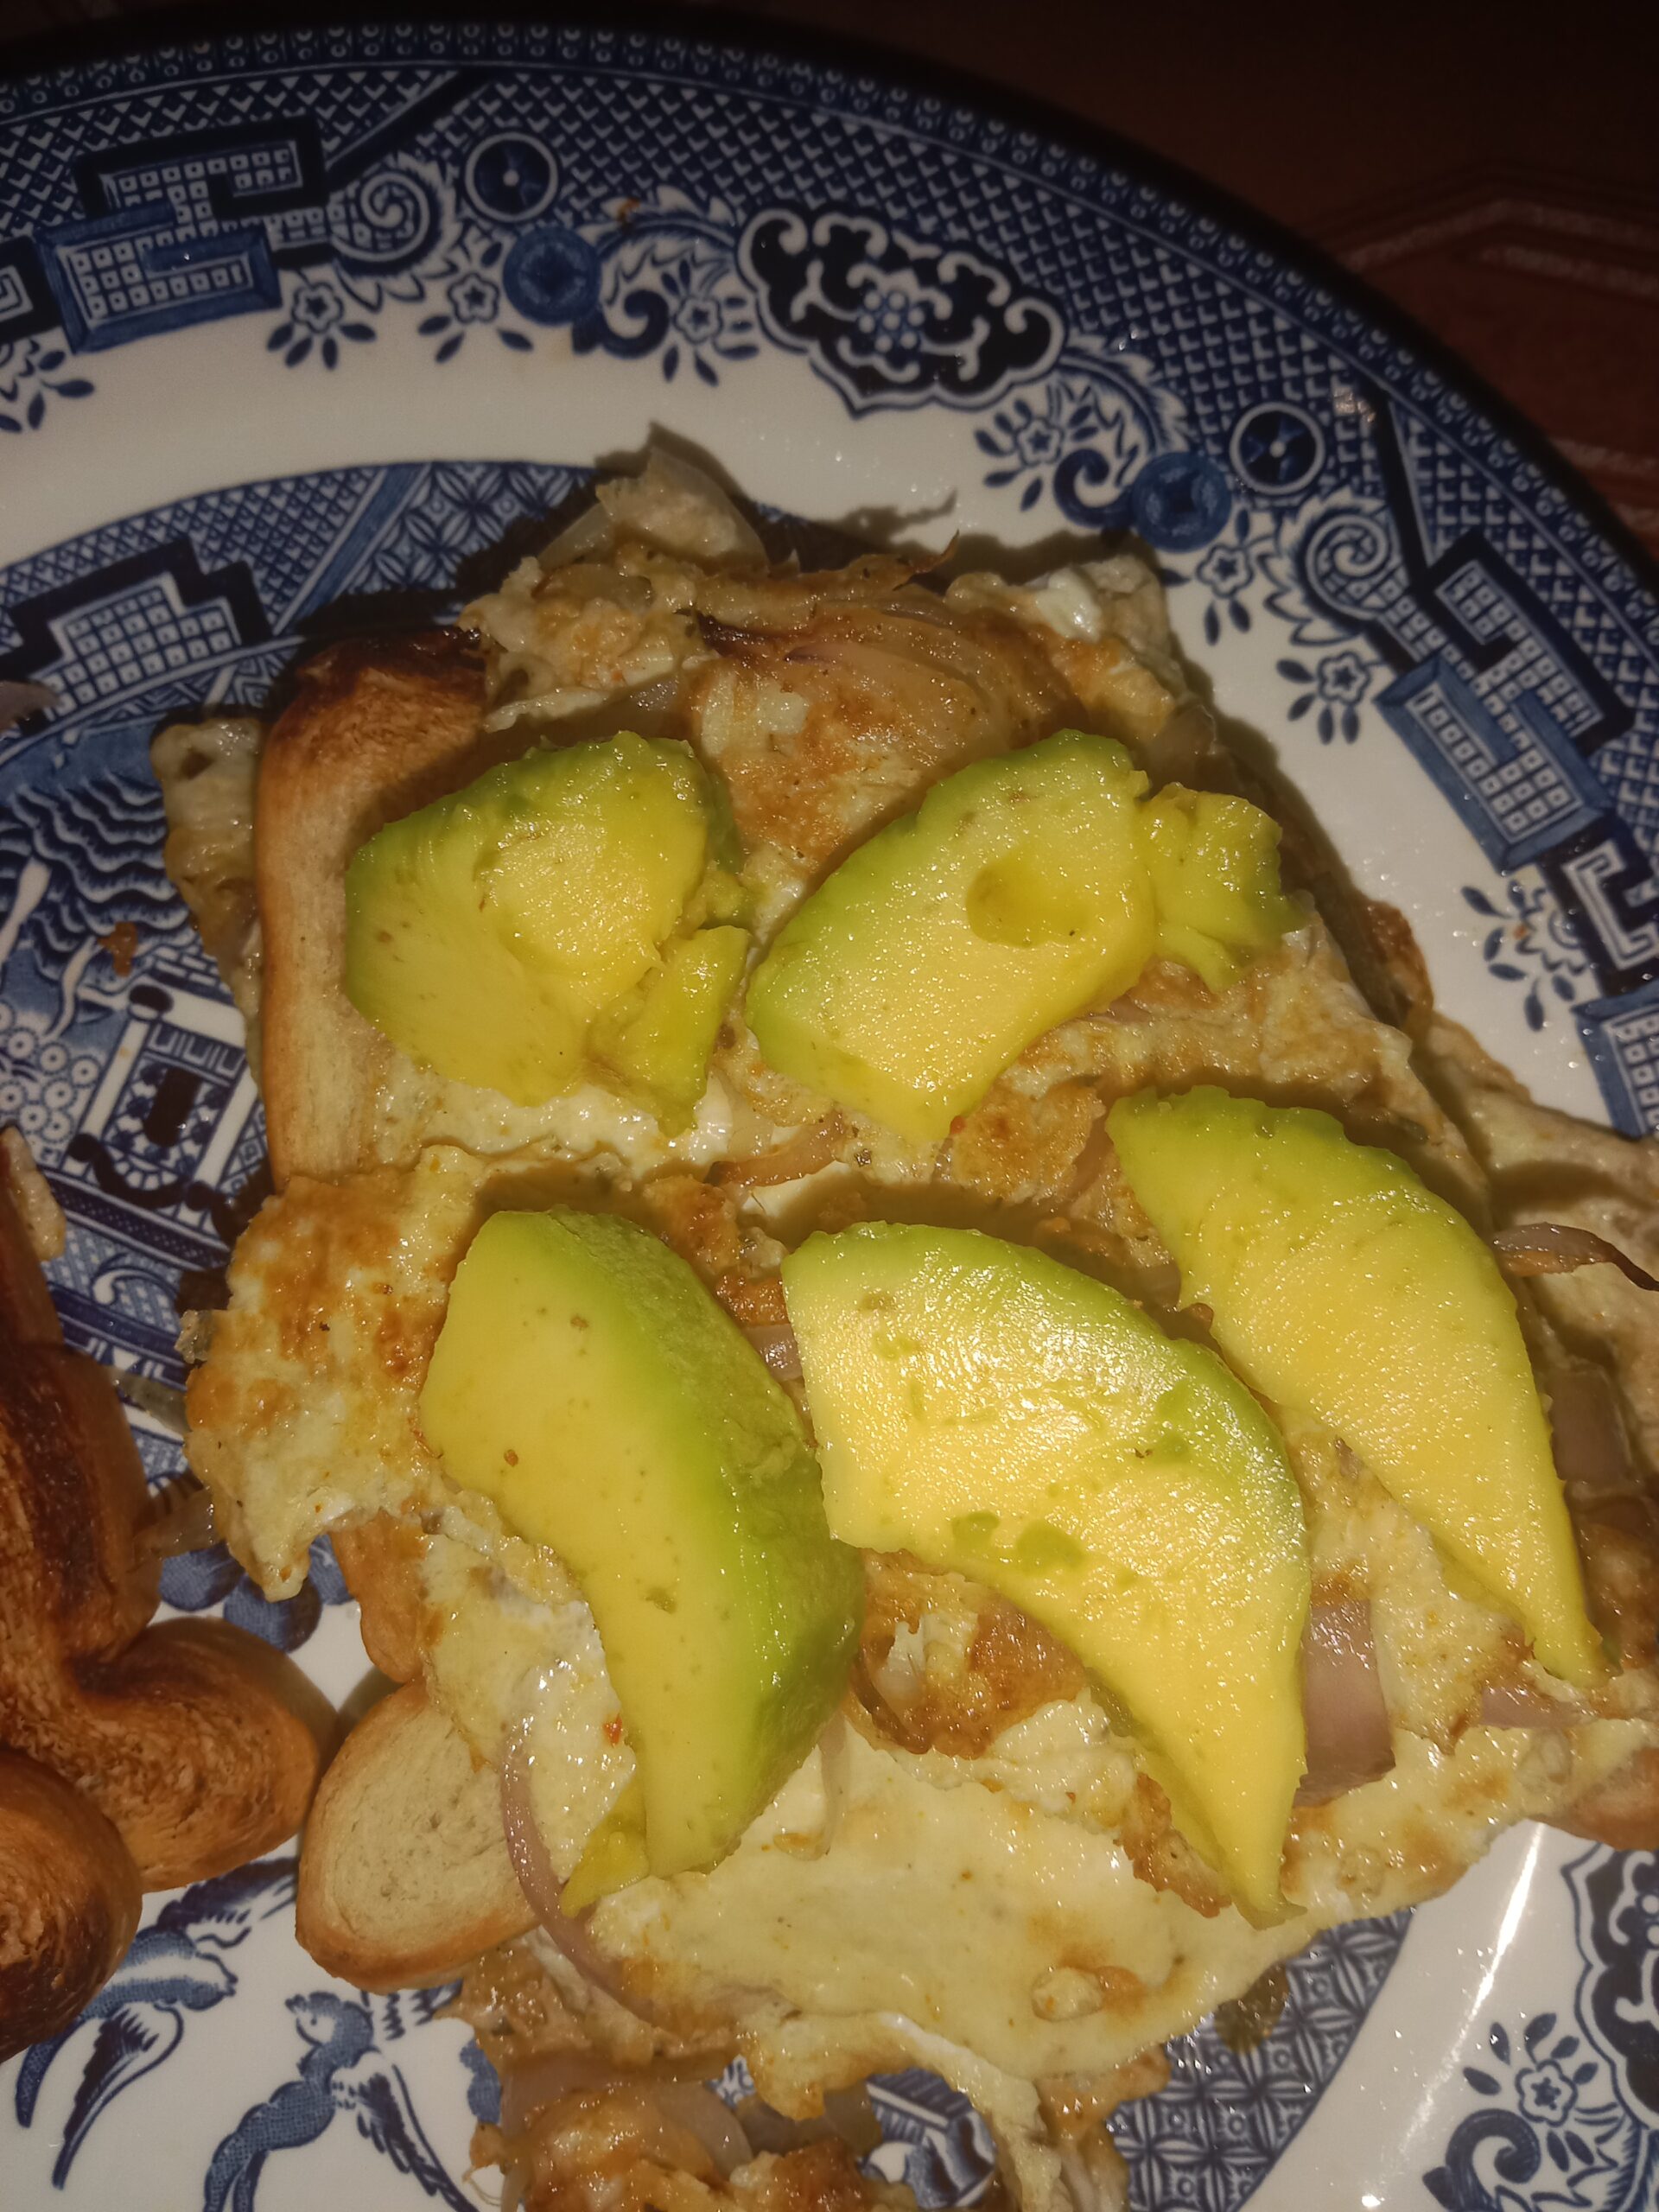 Pan toast egg & avocado sandwich